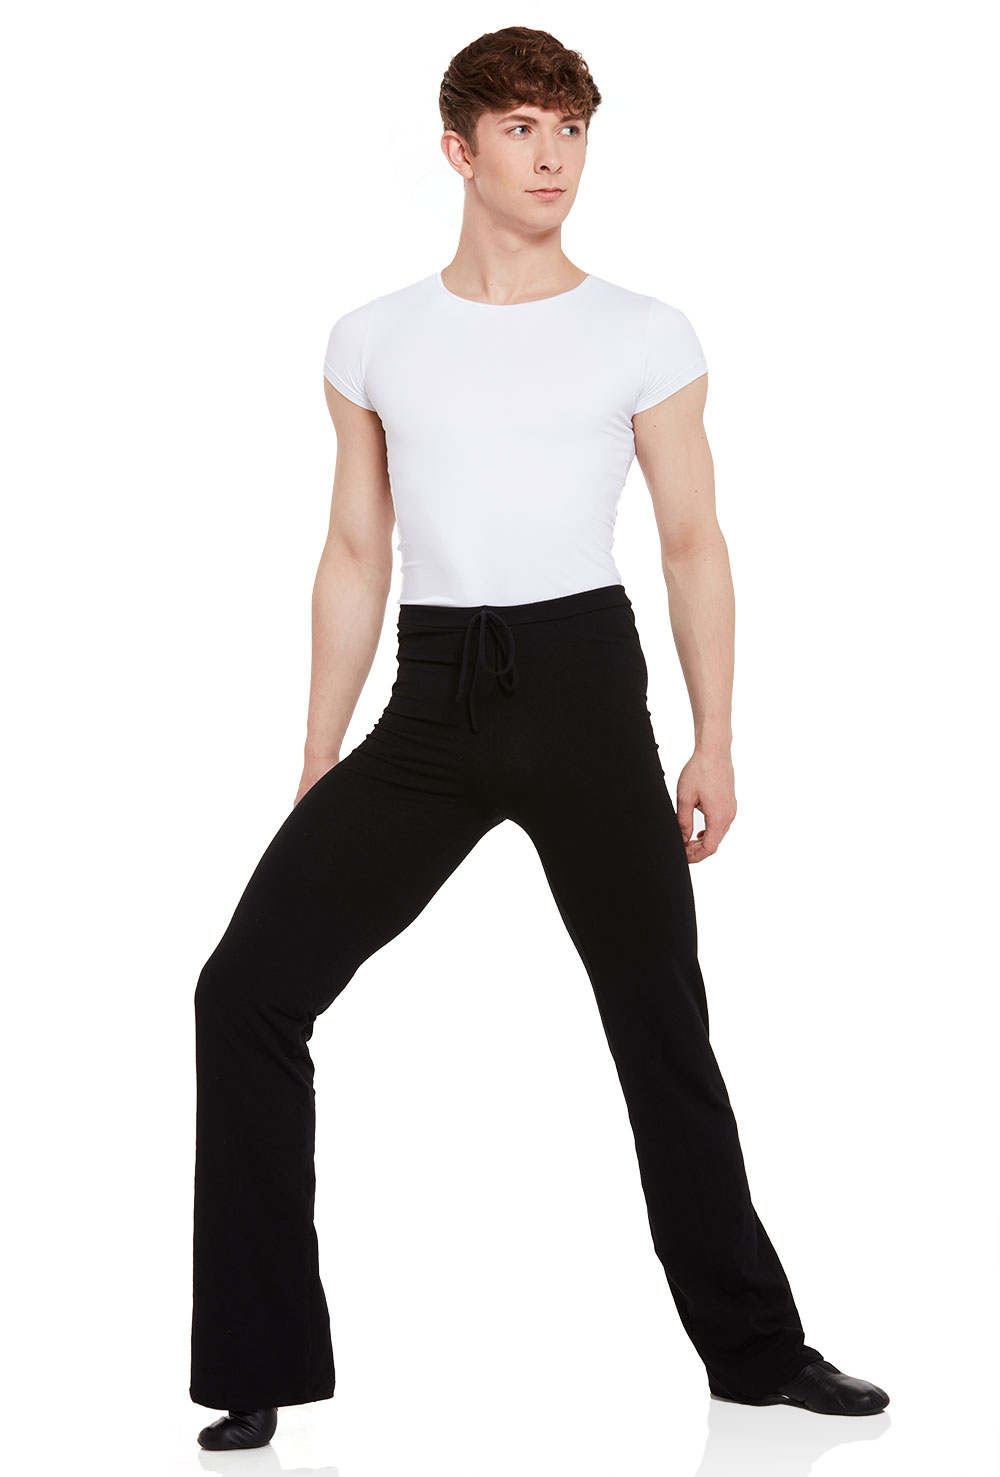 Armando Mens Basic Pocket Dance Trousers 00021 | Dancewear